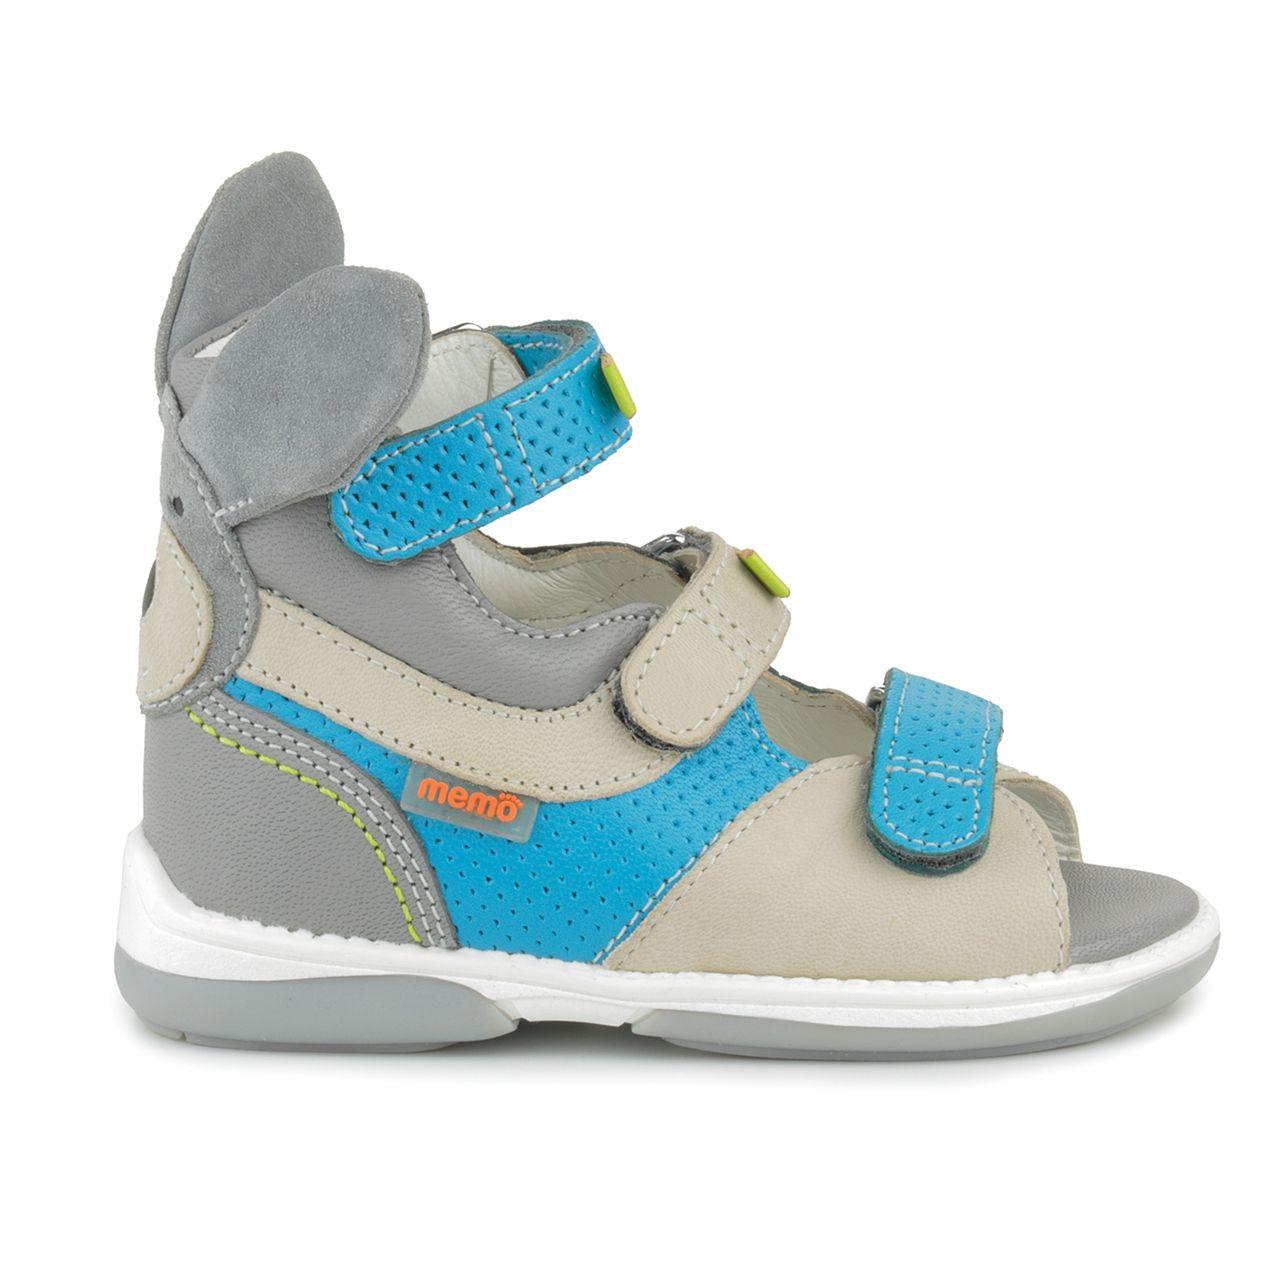 Shoes with Kangaroo Logo - Memo Shoes. Memo Kangaroo 3CH Gray-Blue Sandals — Memo-Shoes.com.